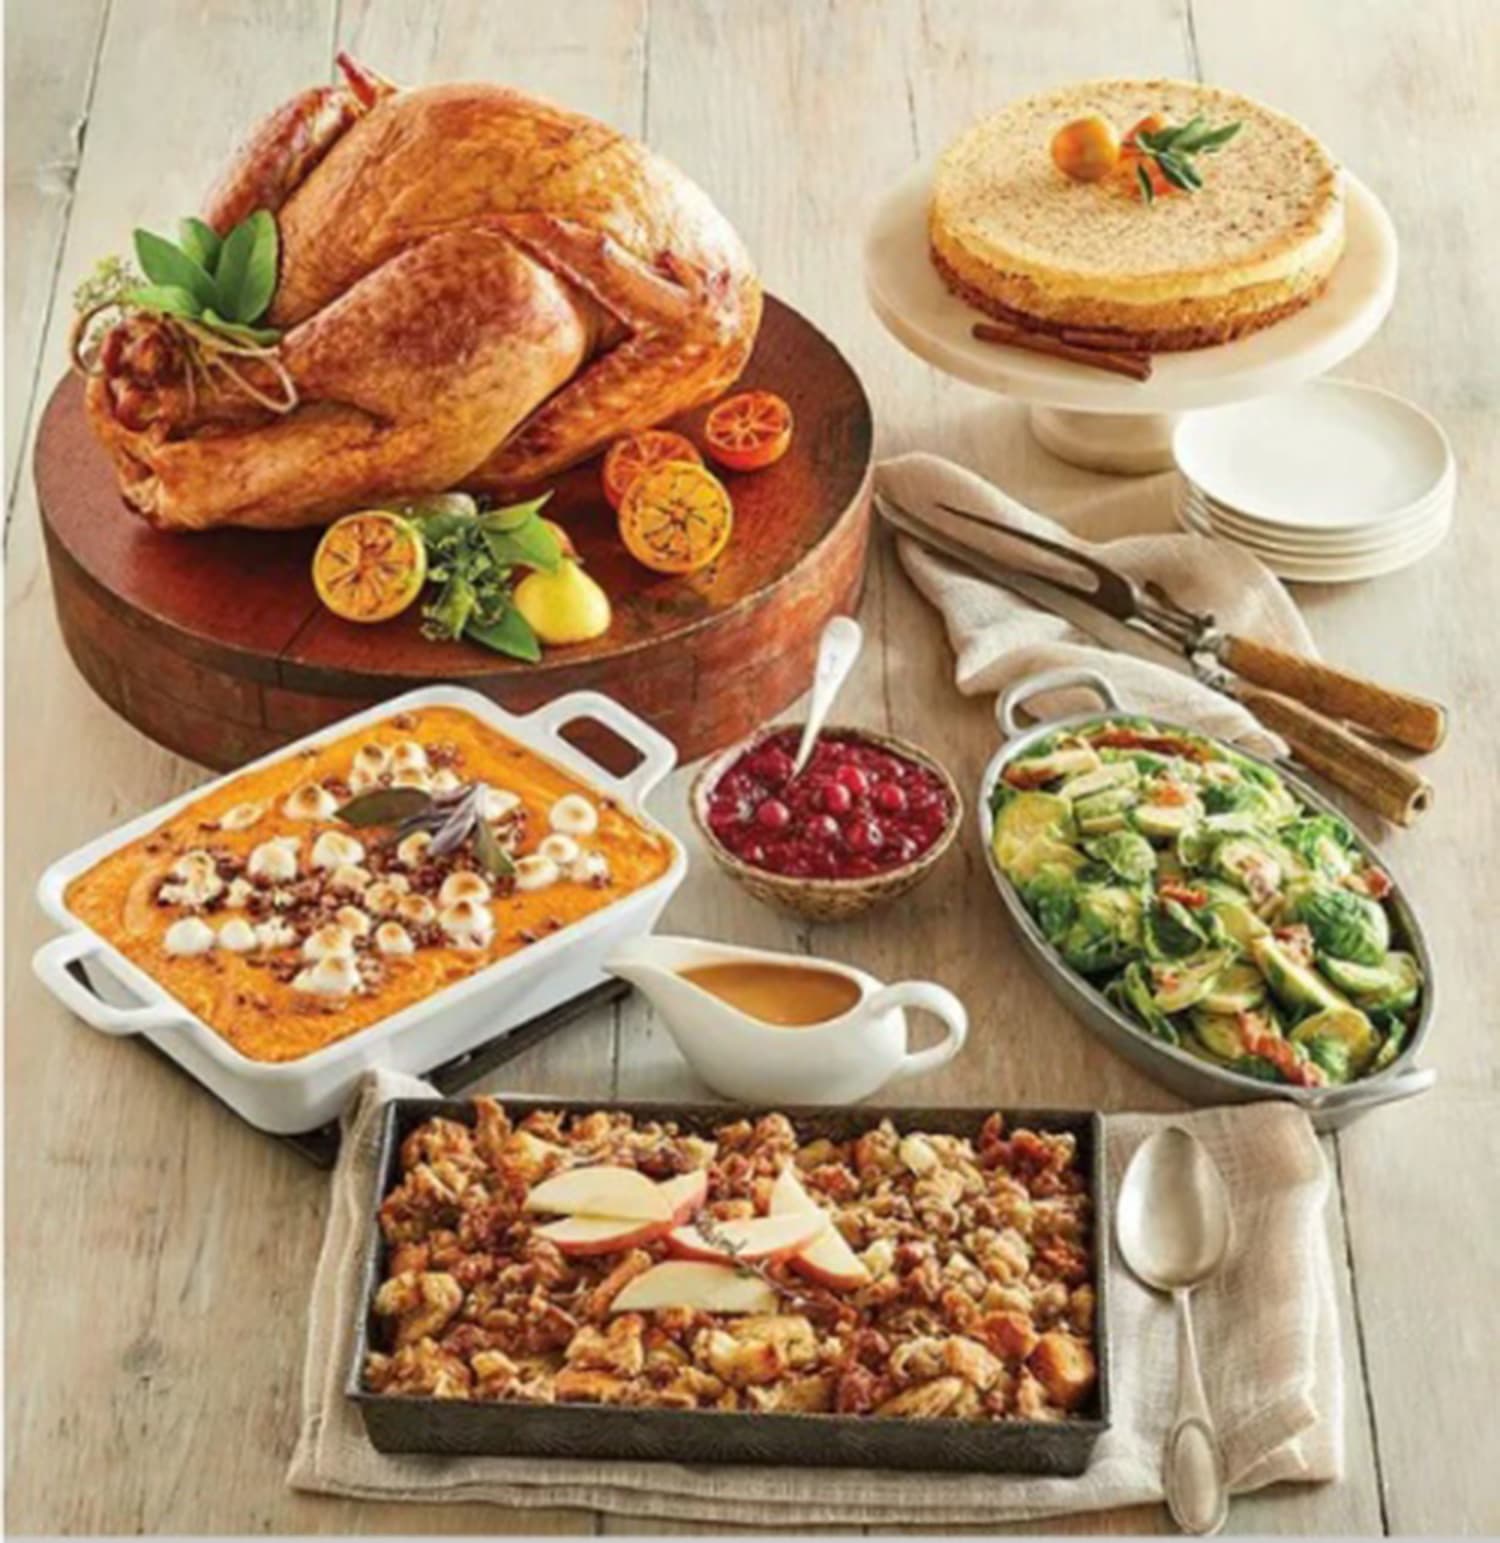 Ready Made Thanksgiving Dinner / 11 Best Restaurants To Buy Premade